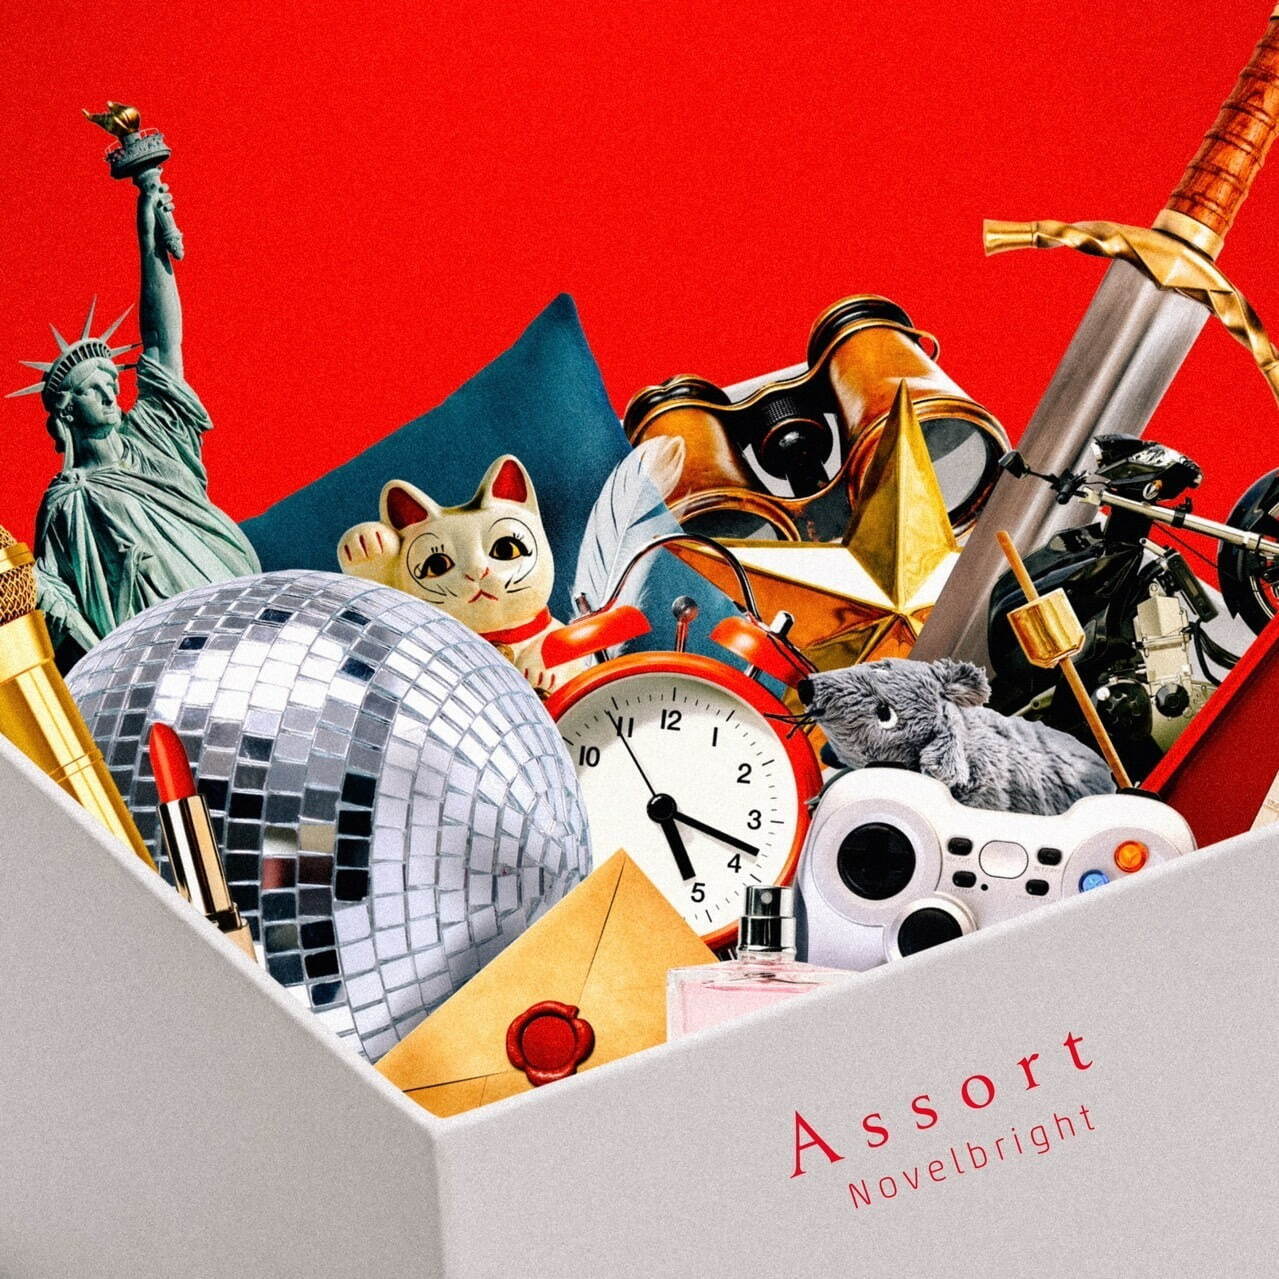 Novelbright 最新アルバム『Assort』初回限定盤(CD+DVD) 4,400円